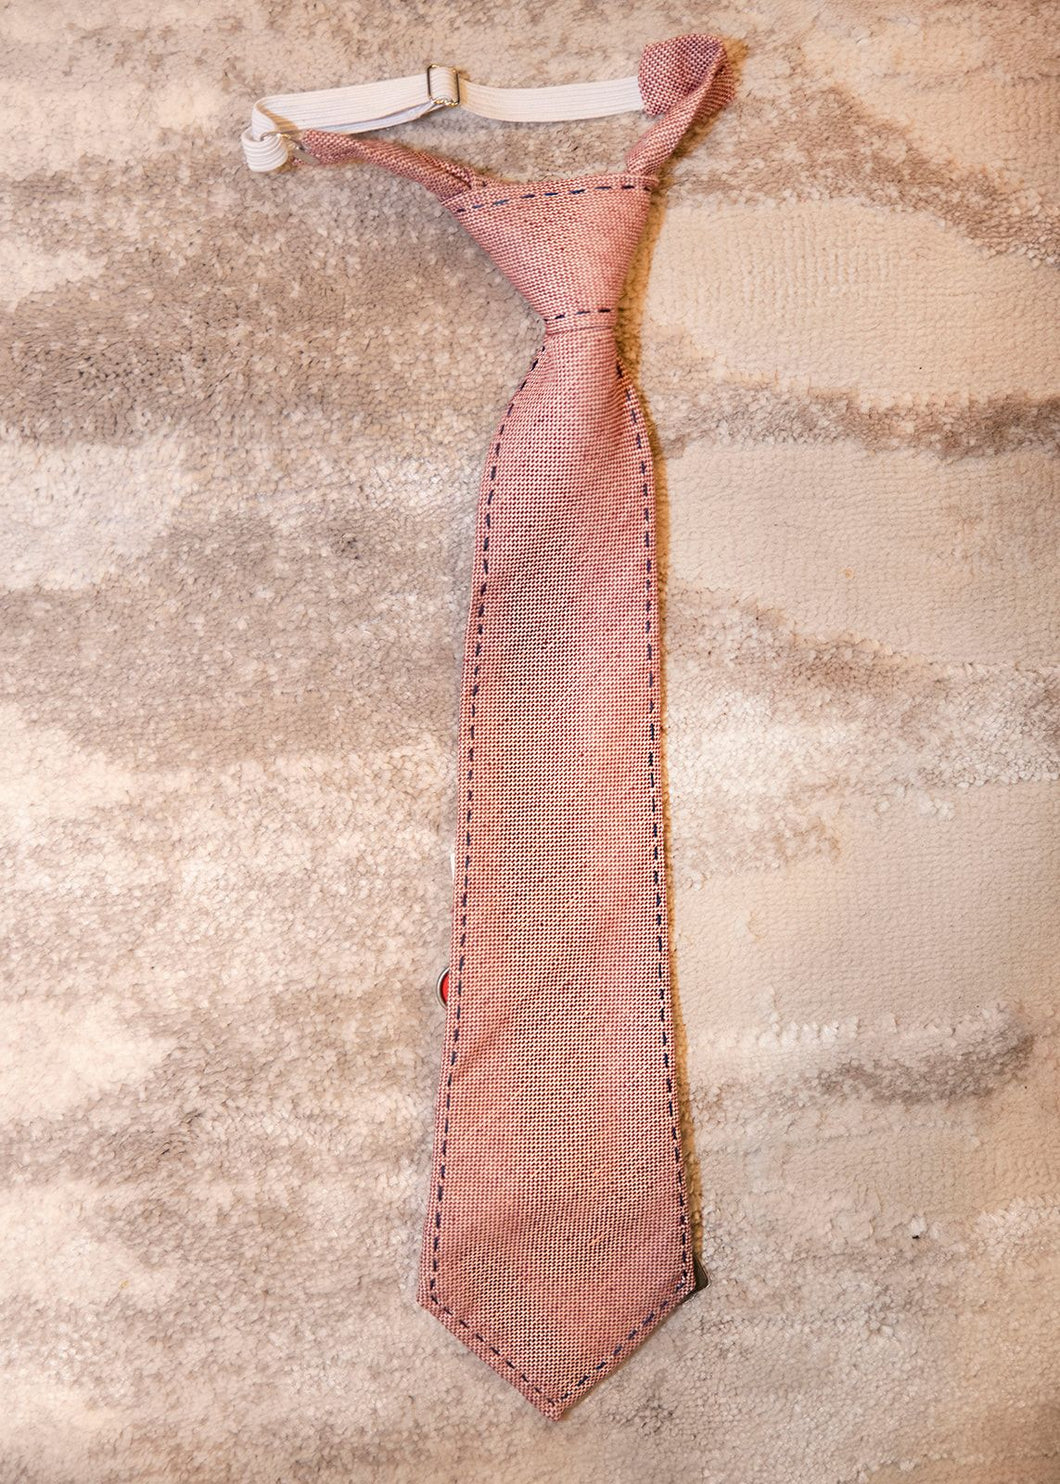 Corbata rosa punteada orilla